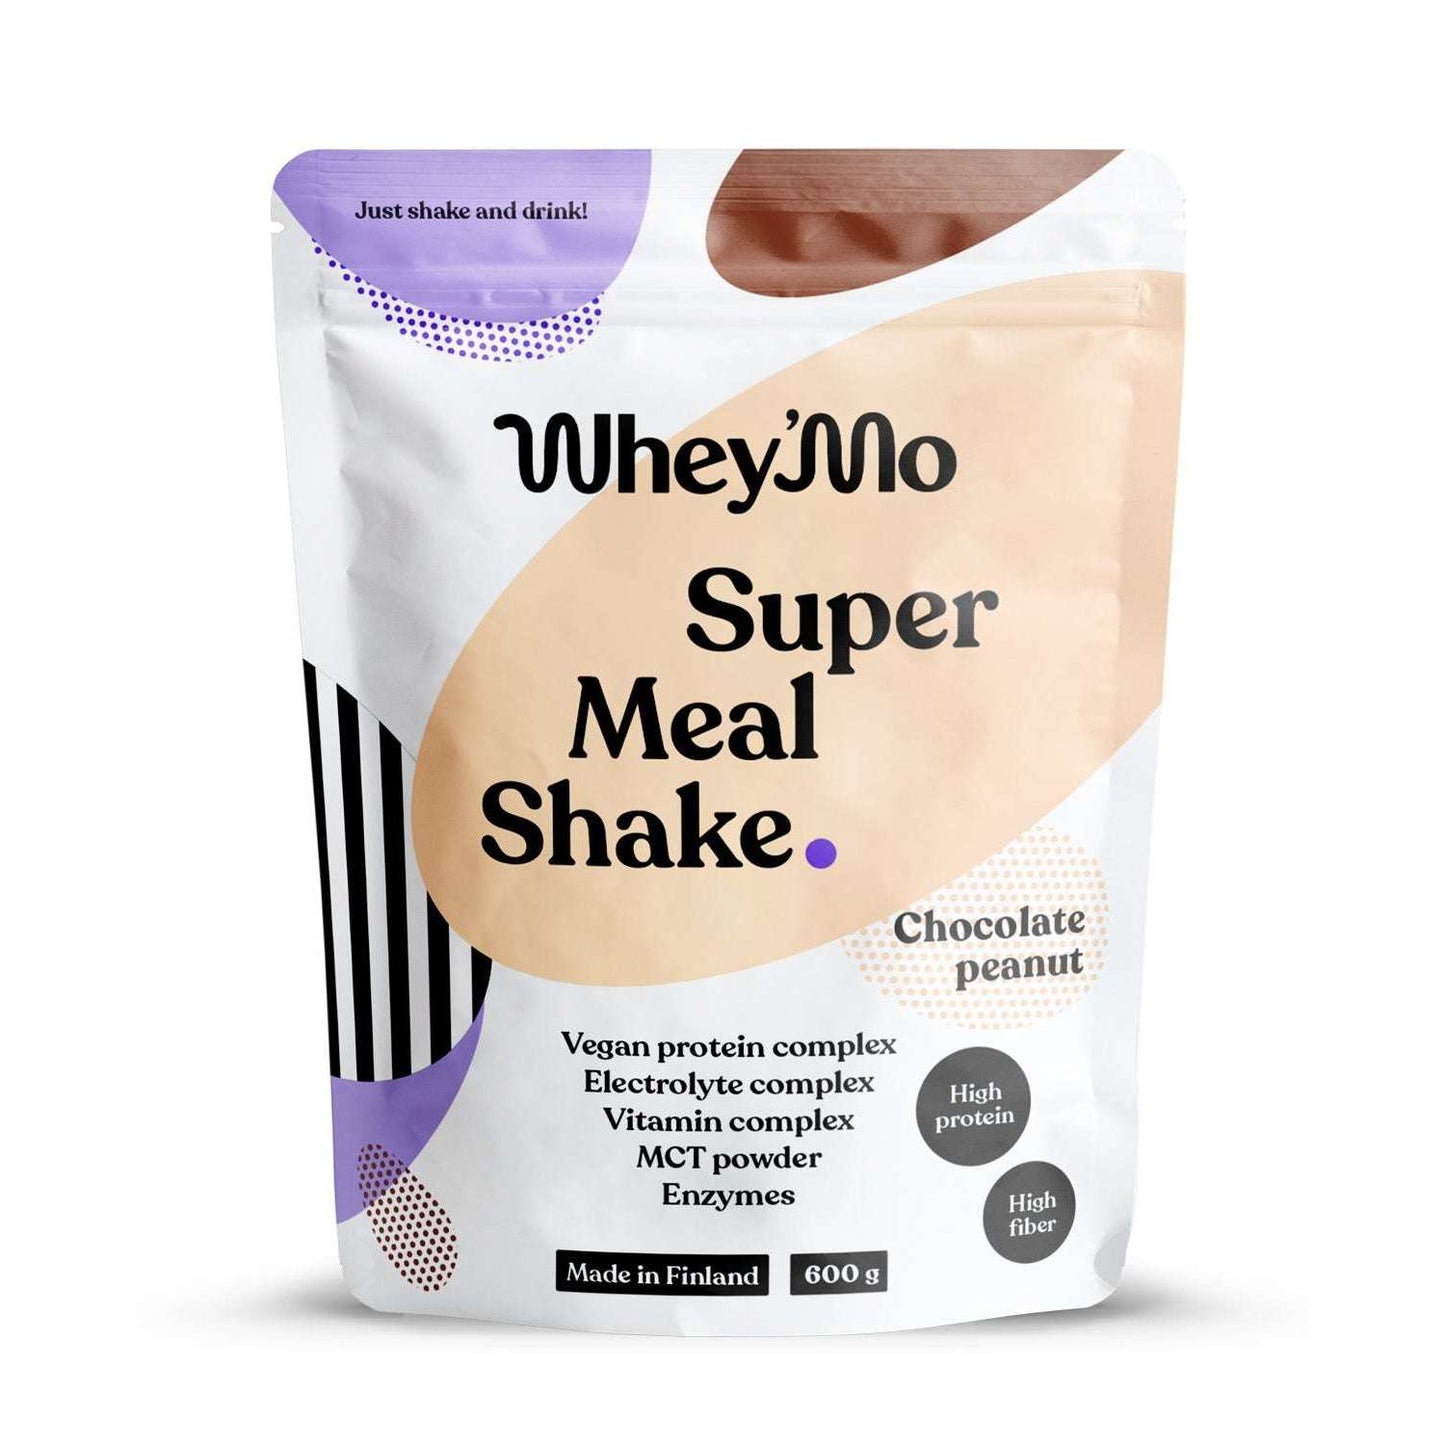 Whey'Mo Super Meal Shake Chocolate Peanut